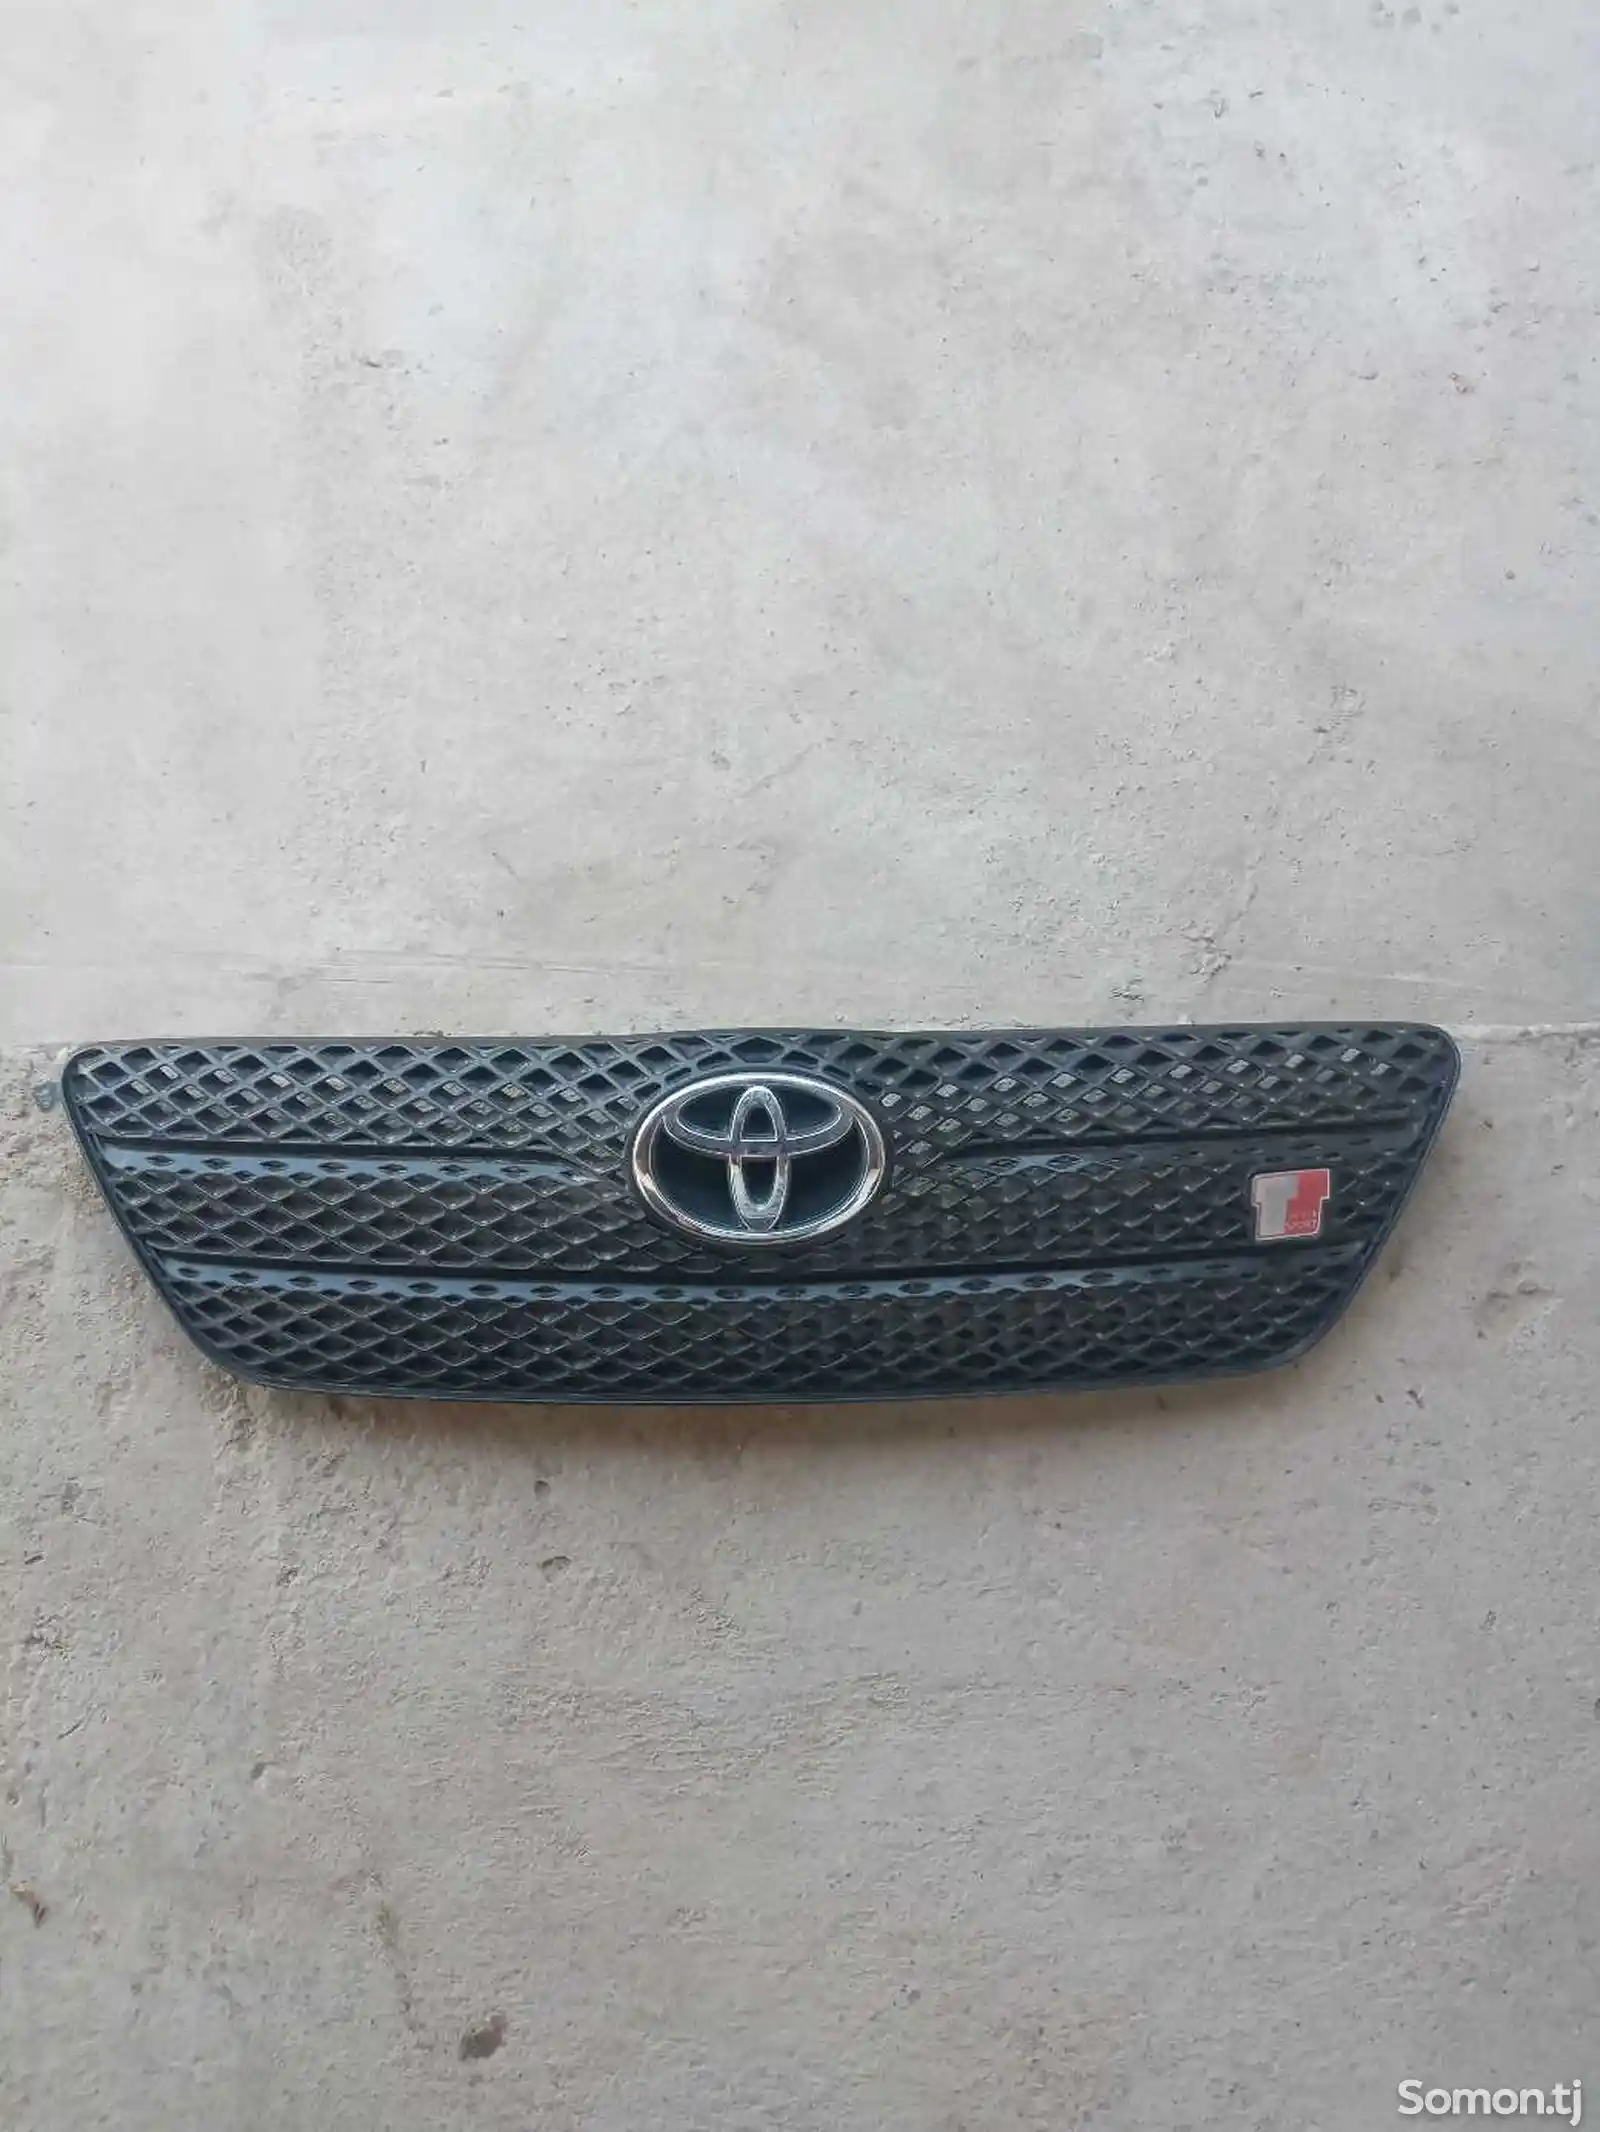 Решетка радиатора от Toyota-1